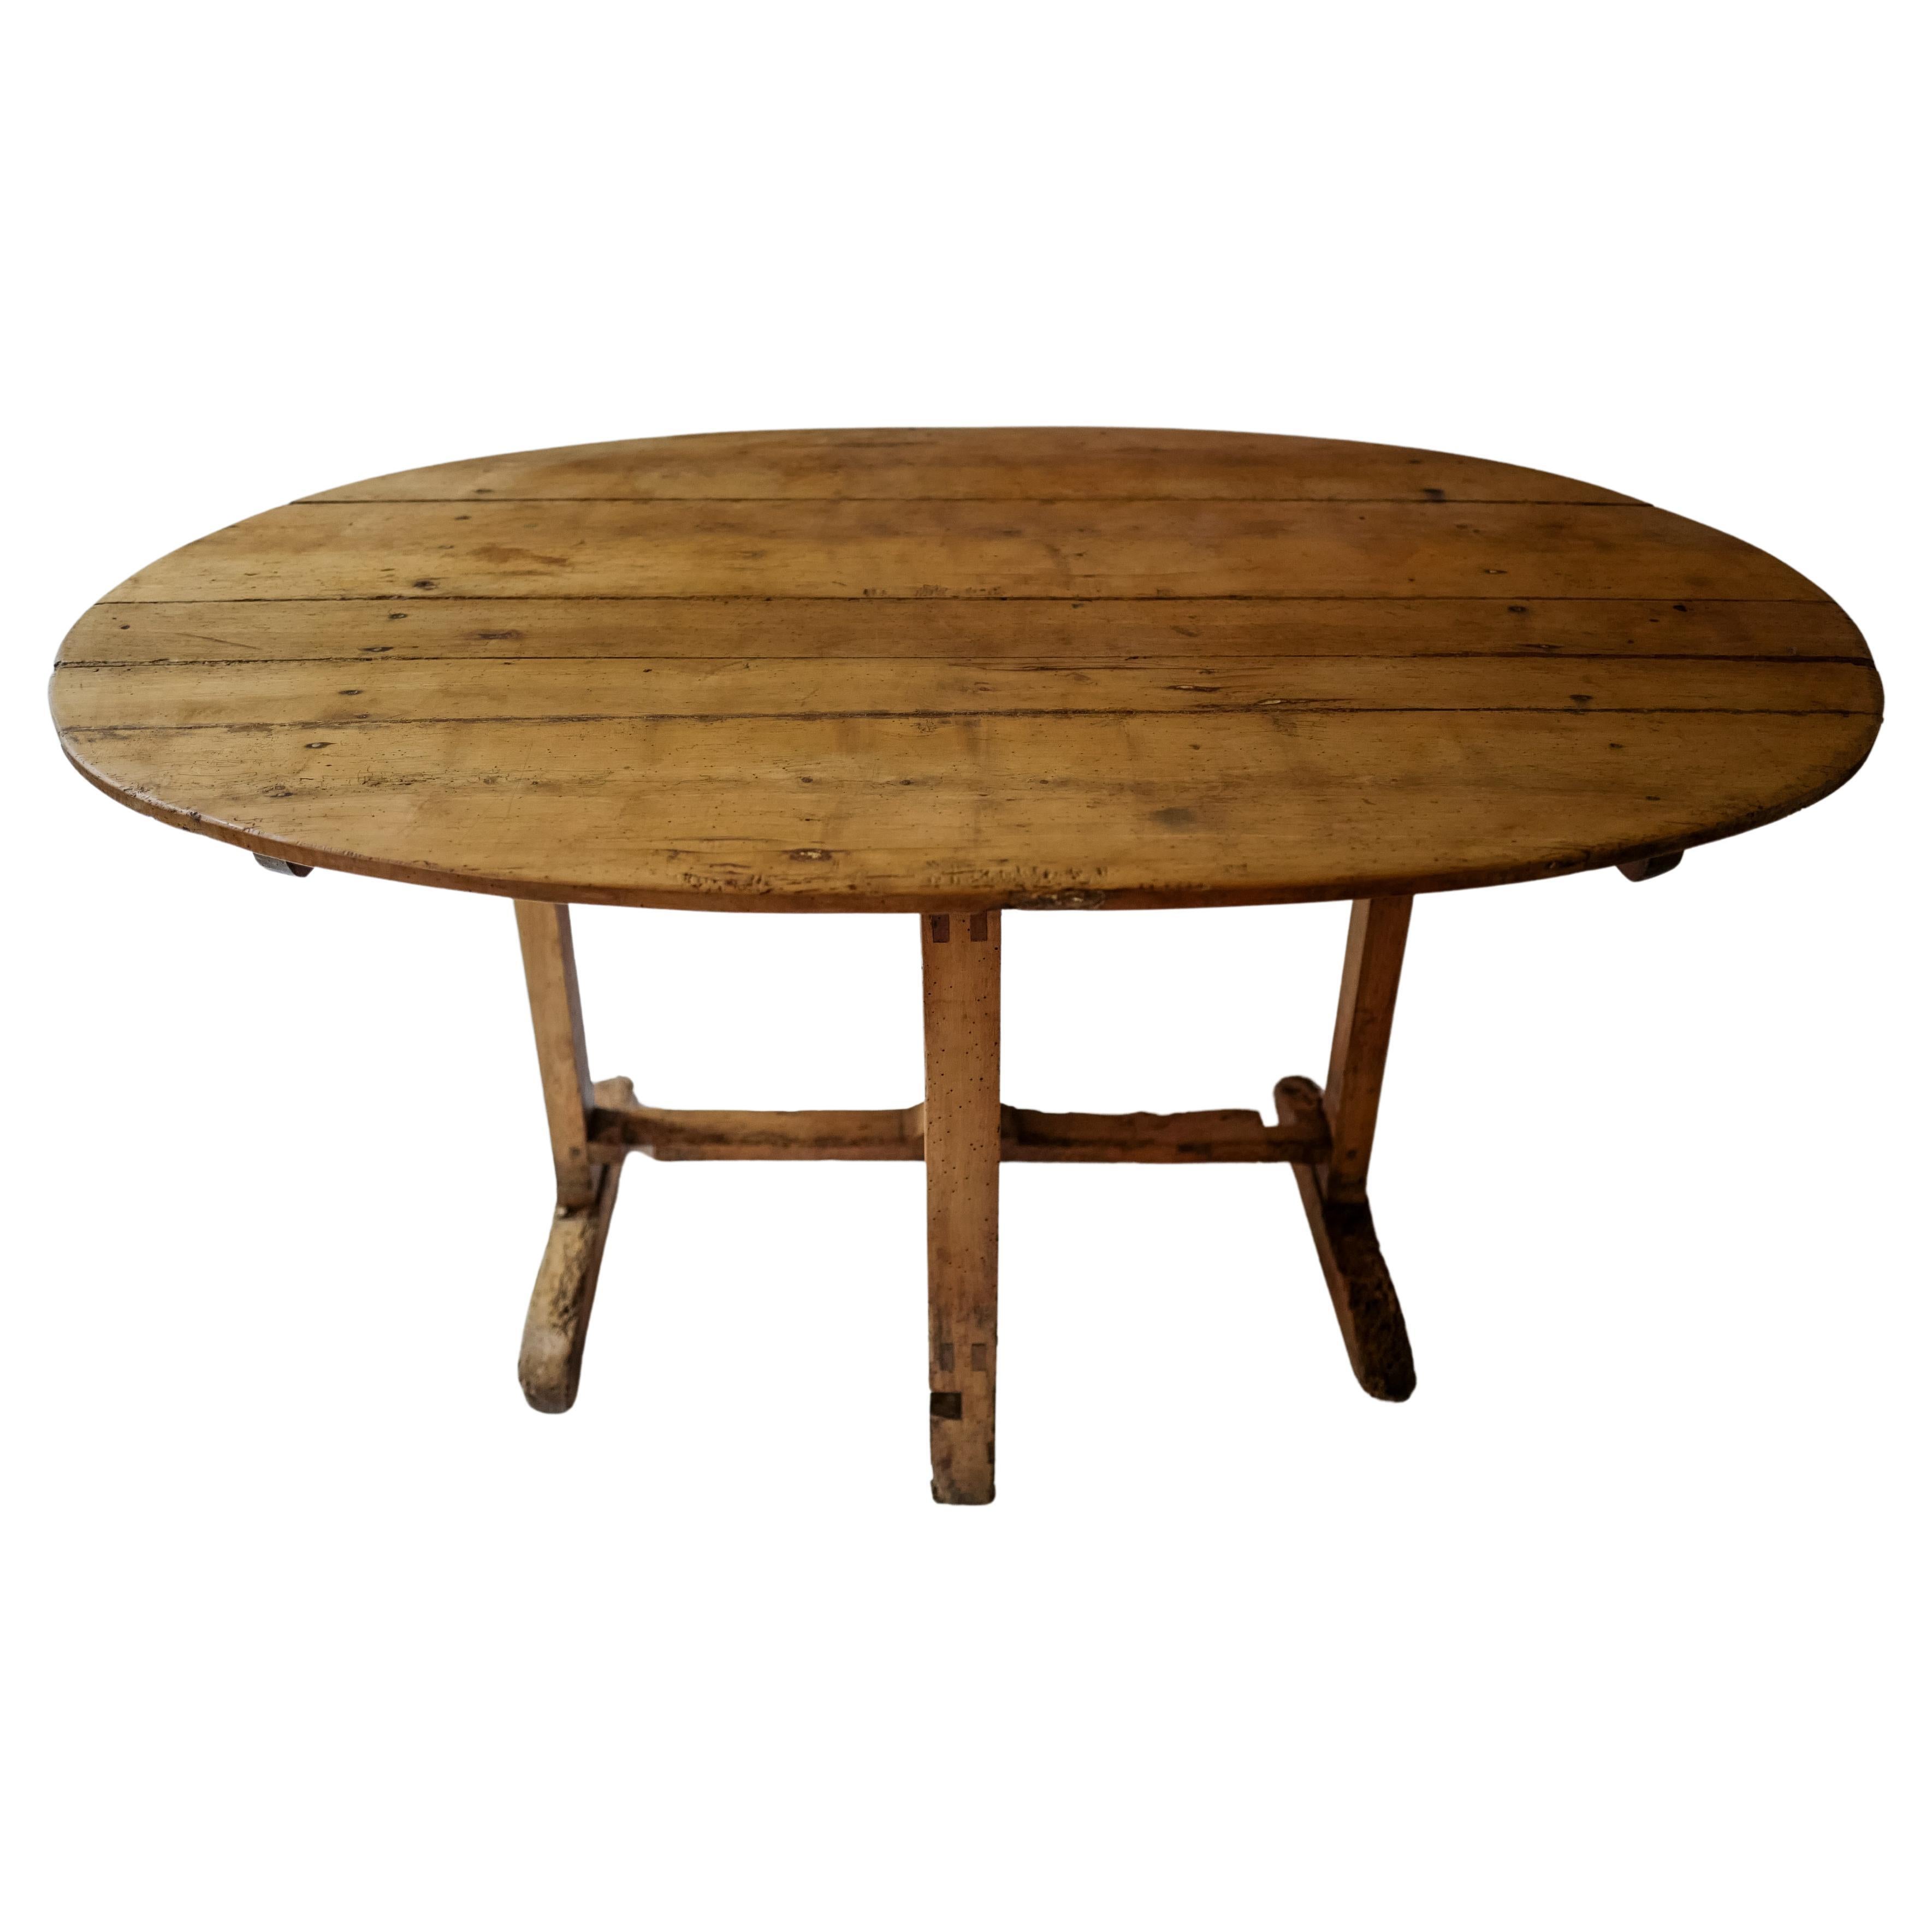 Italian/French Alp Pine wood tilt top oval shaped table 